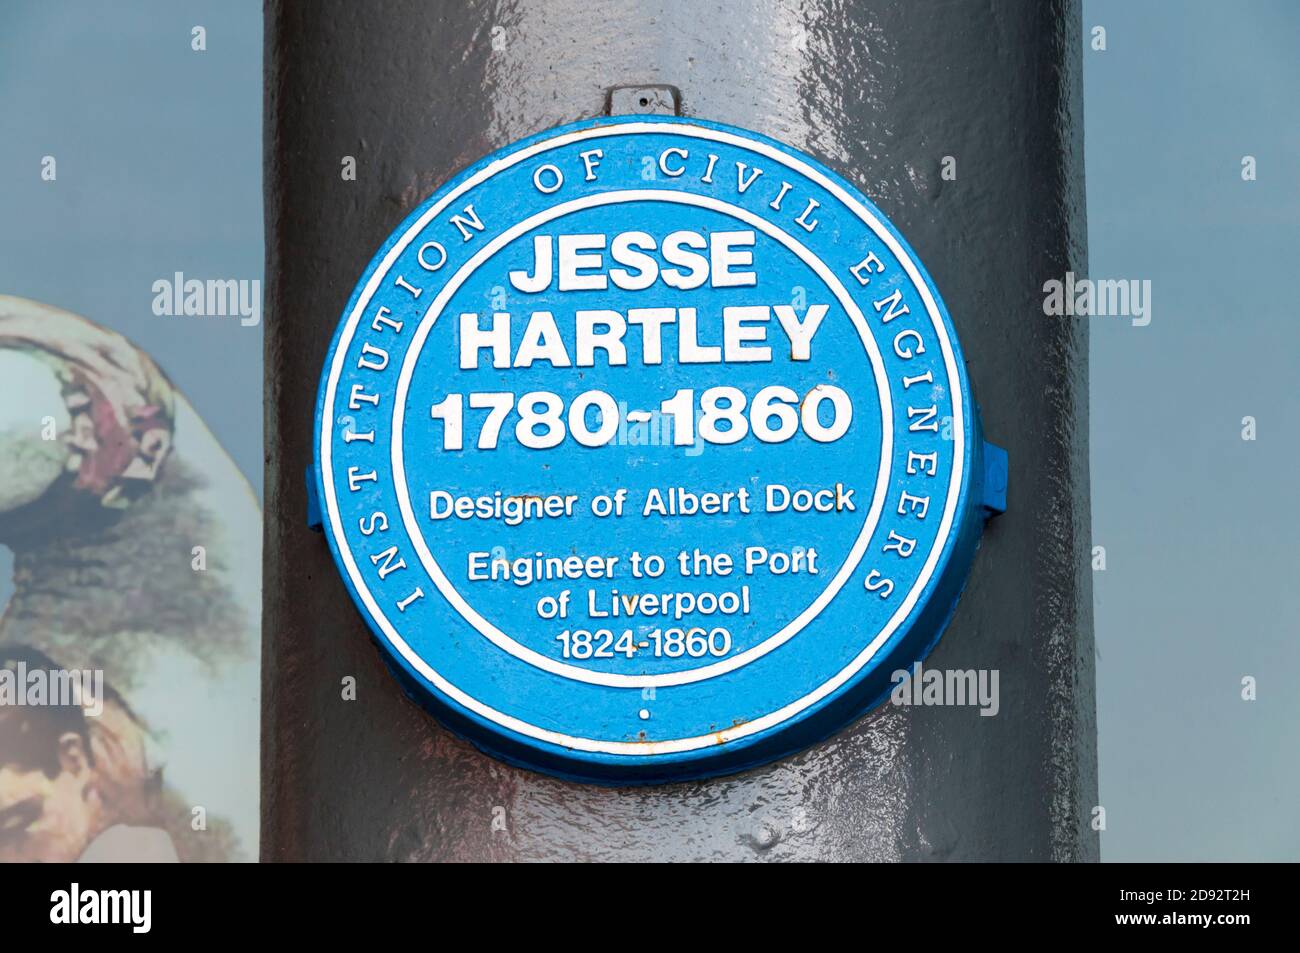 Die blaue Gedenktafel der Institution of Civil Engineers erinnert an Jesse Hartley, den Designer des Albert Dock in Liverpool. Stockfoto